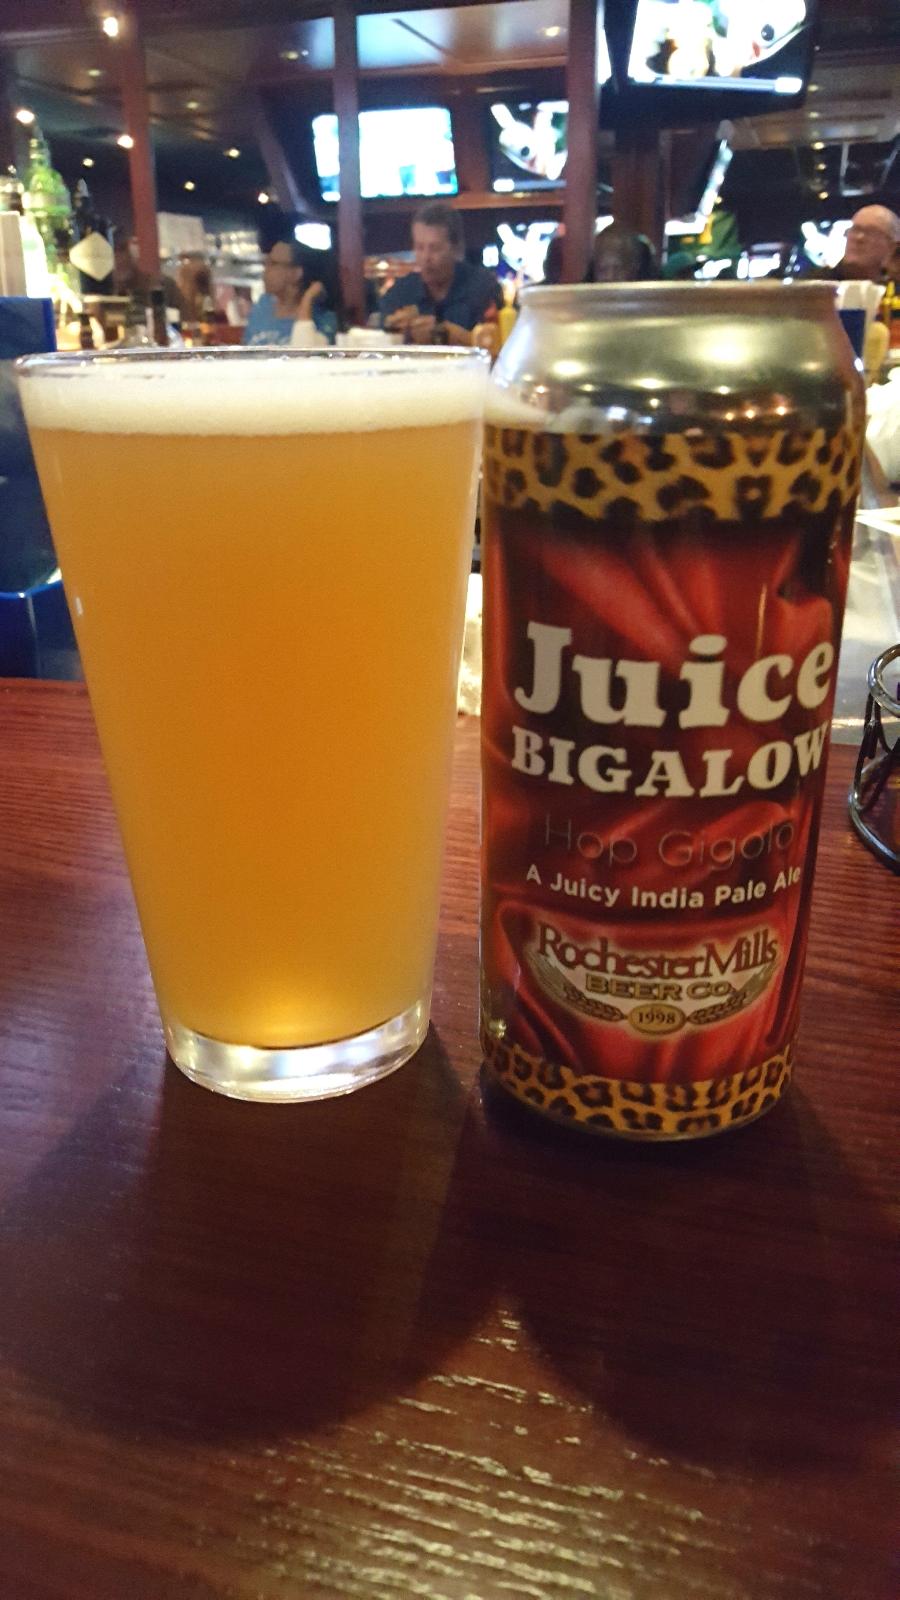 Juice Bigalow